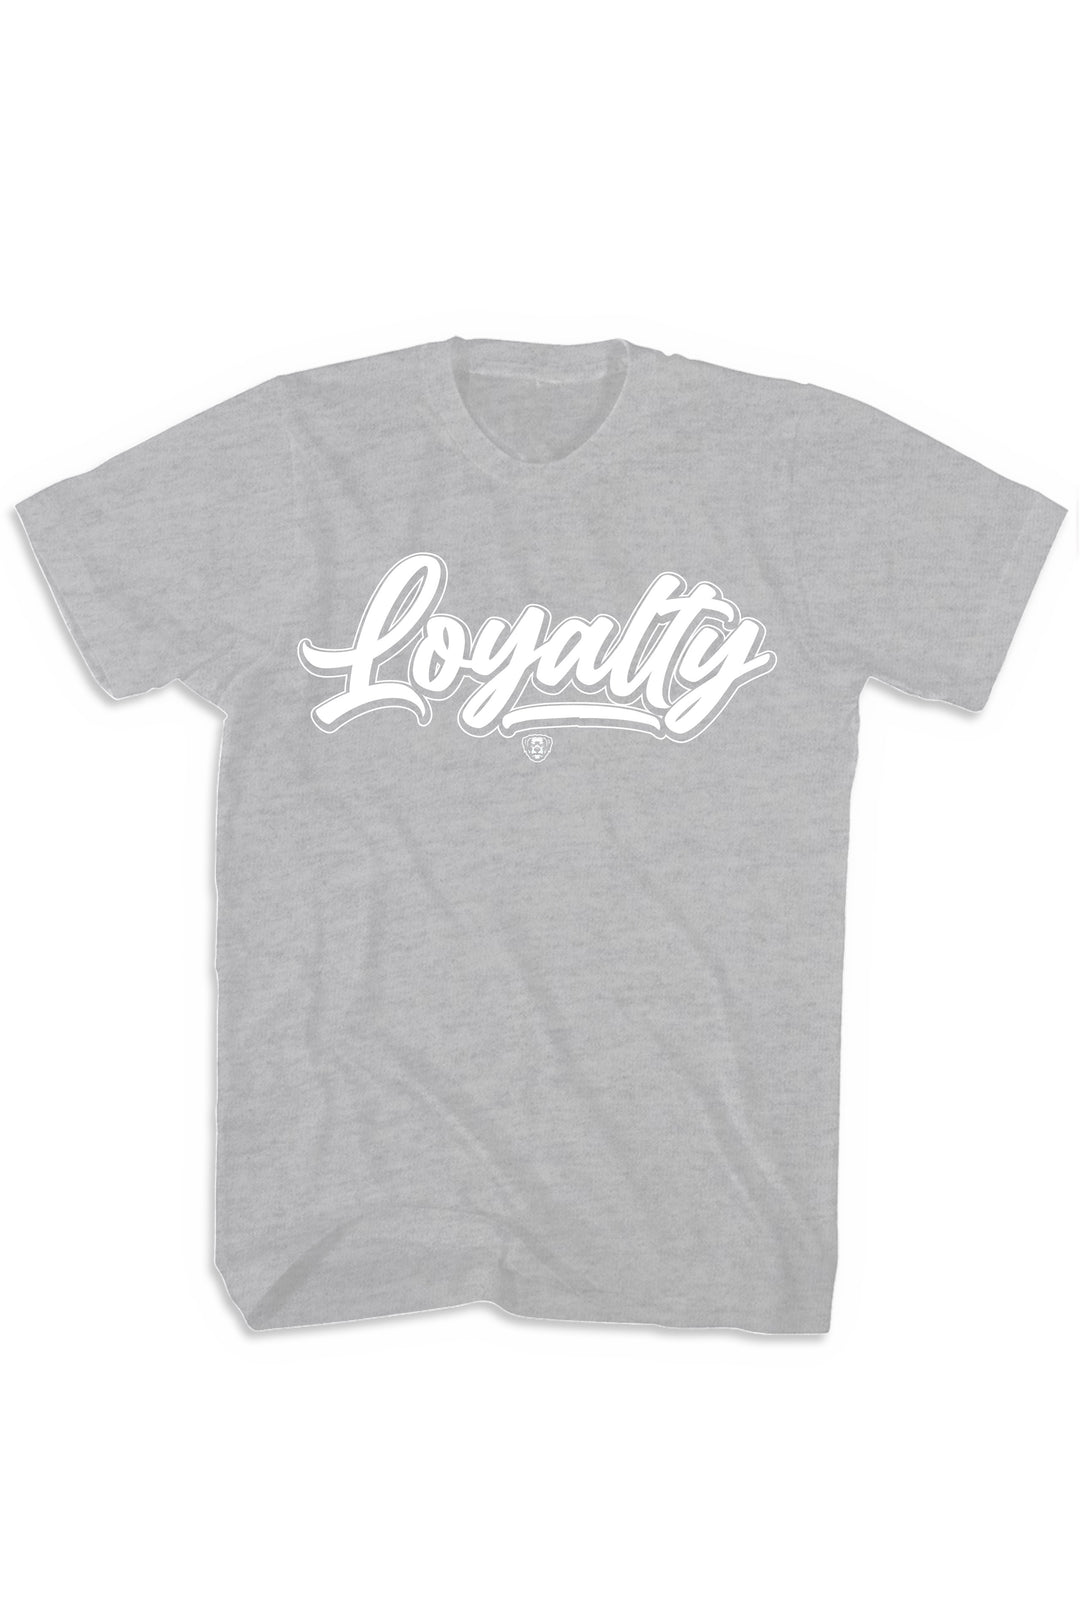 Loyalty Tee (White Logo) - Zamage